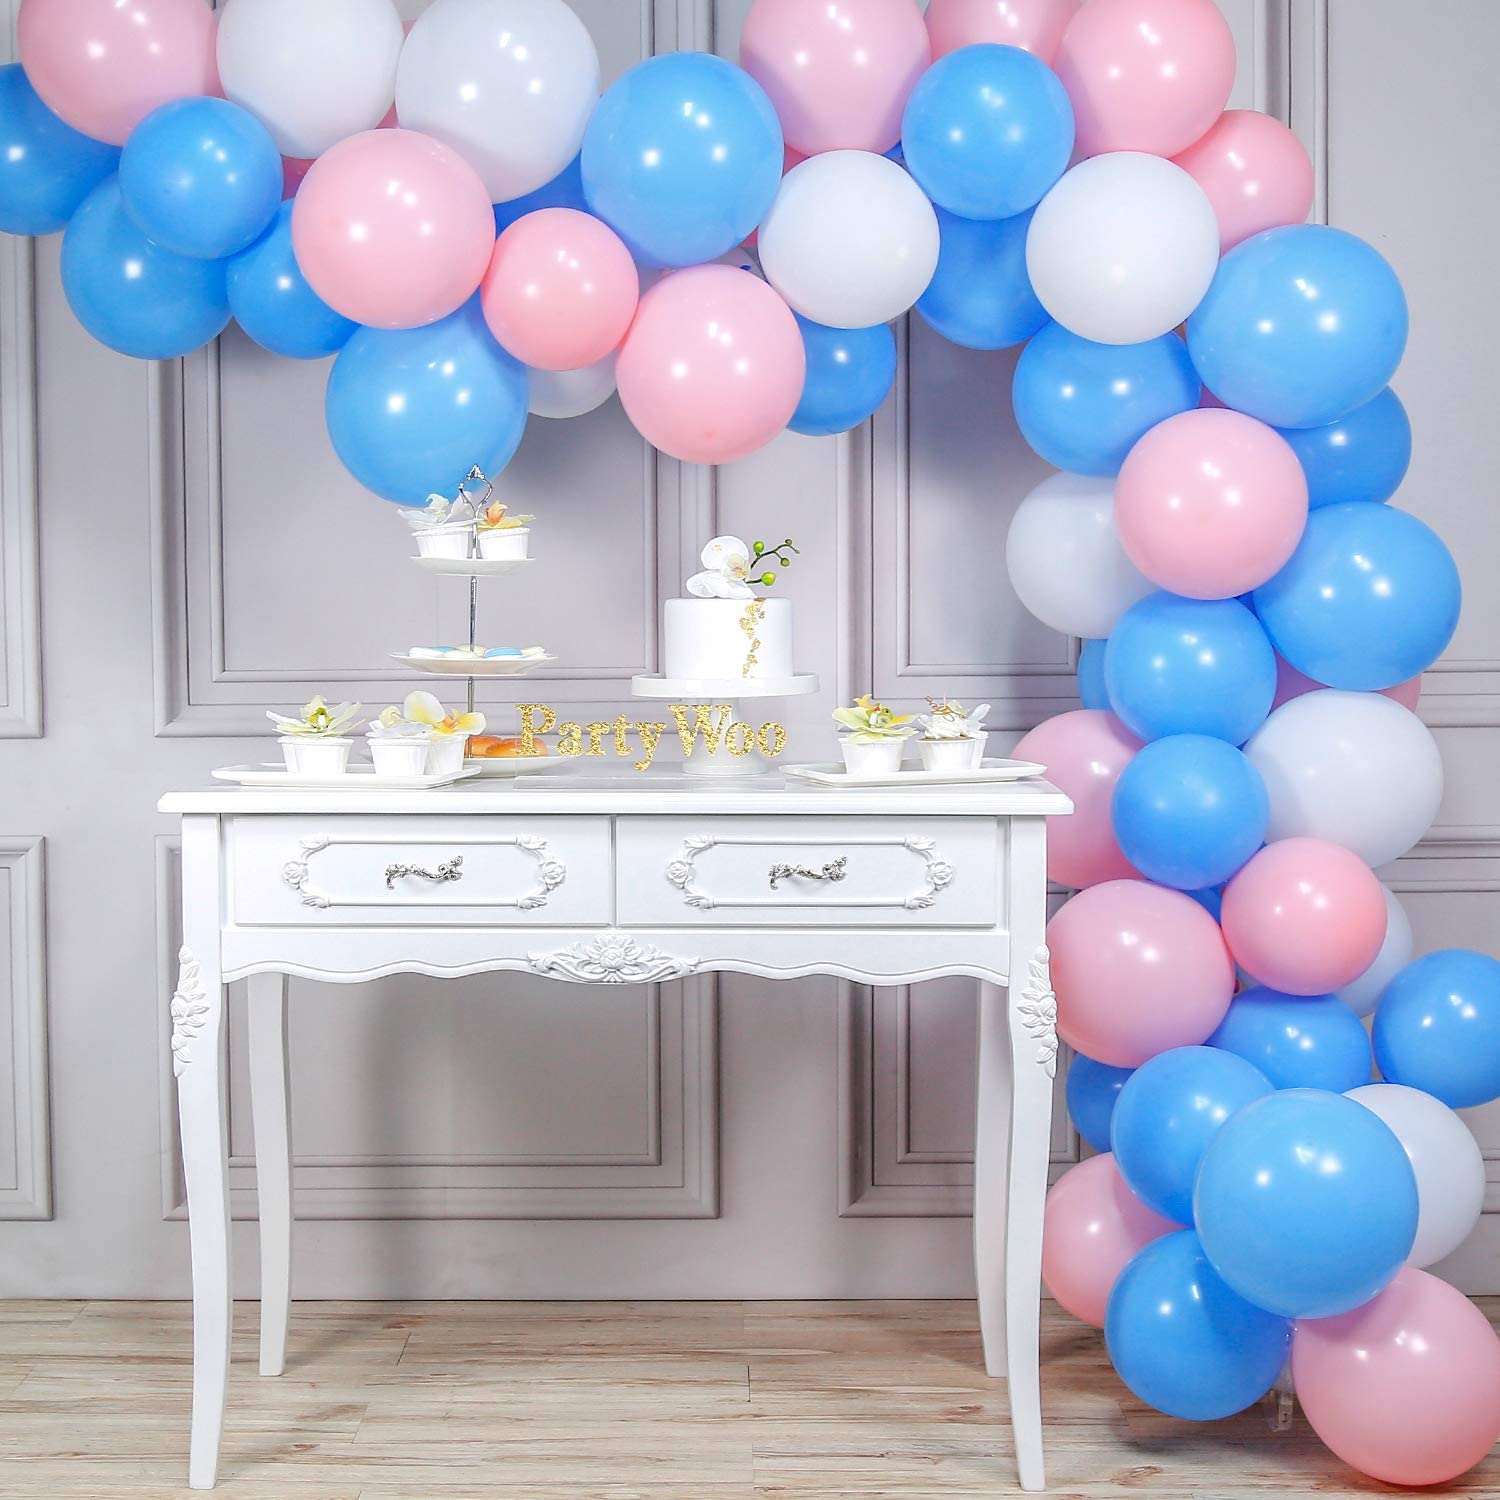 Frozen Theme Birthday Decoration for Girls 56 Pcs – Princess Elsa Birthday Party Decorations – Frozen Birthday Decorations for Girls